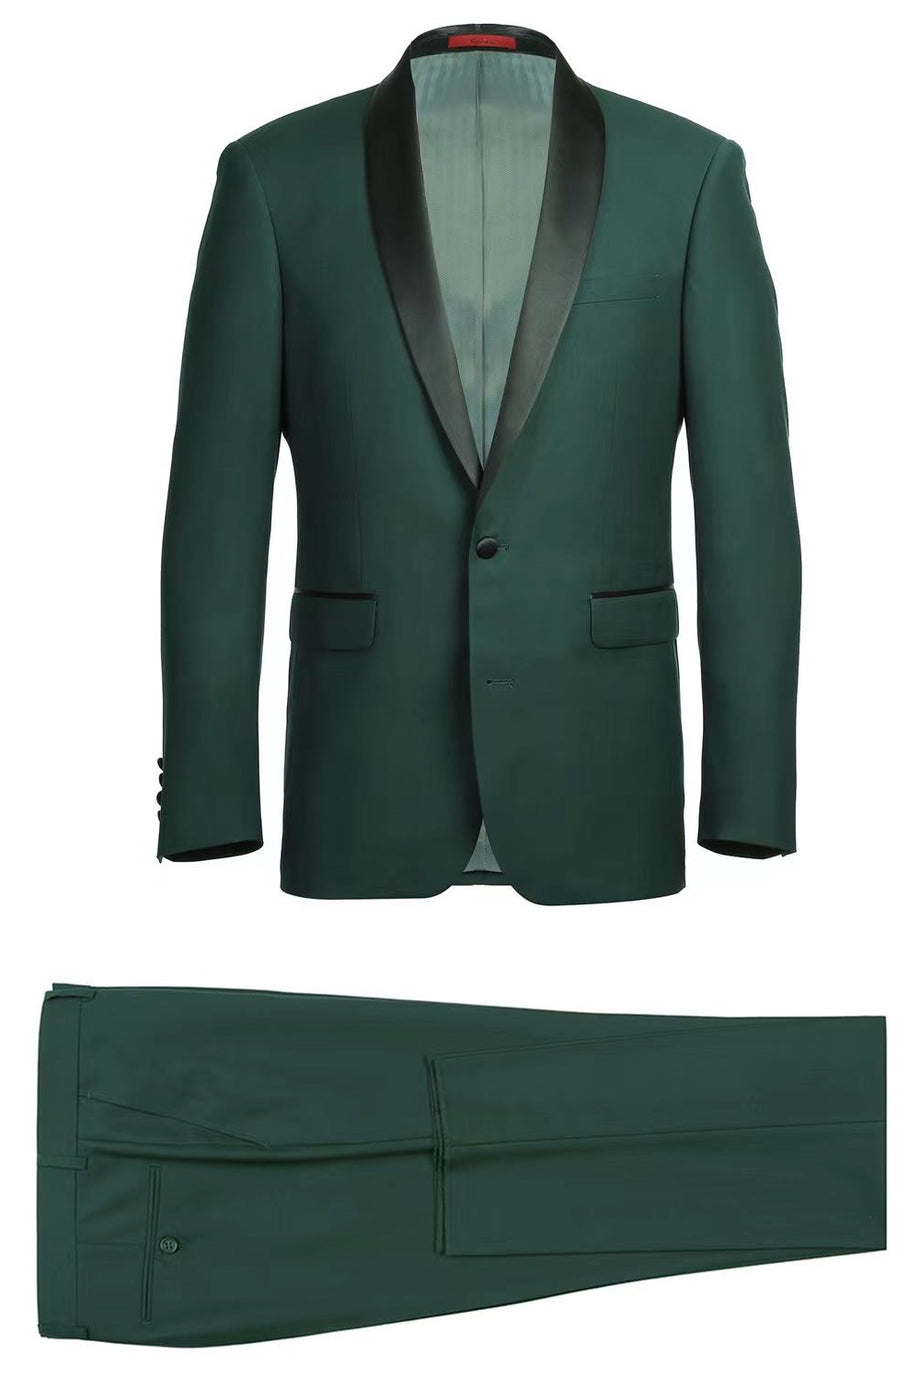 "Paris" Green 1-Button Shawl Tuxedo (2-Piece Set)